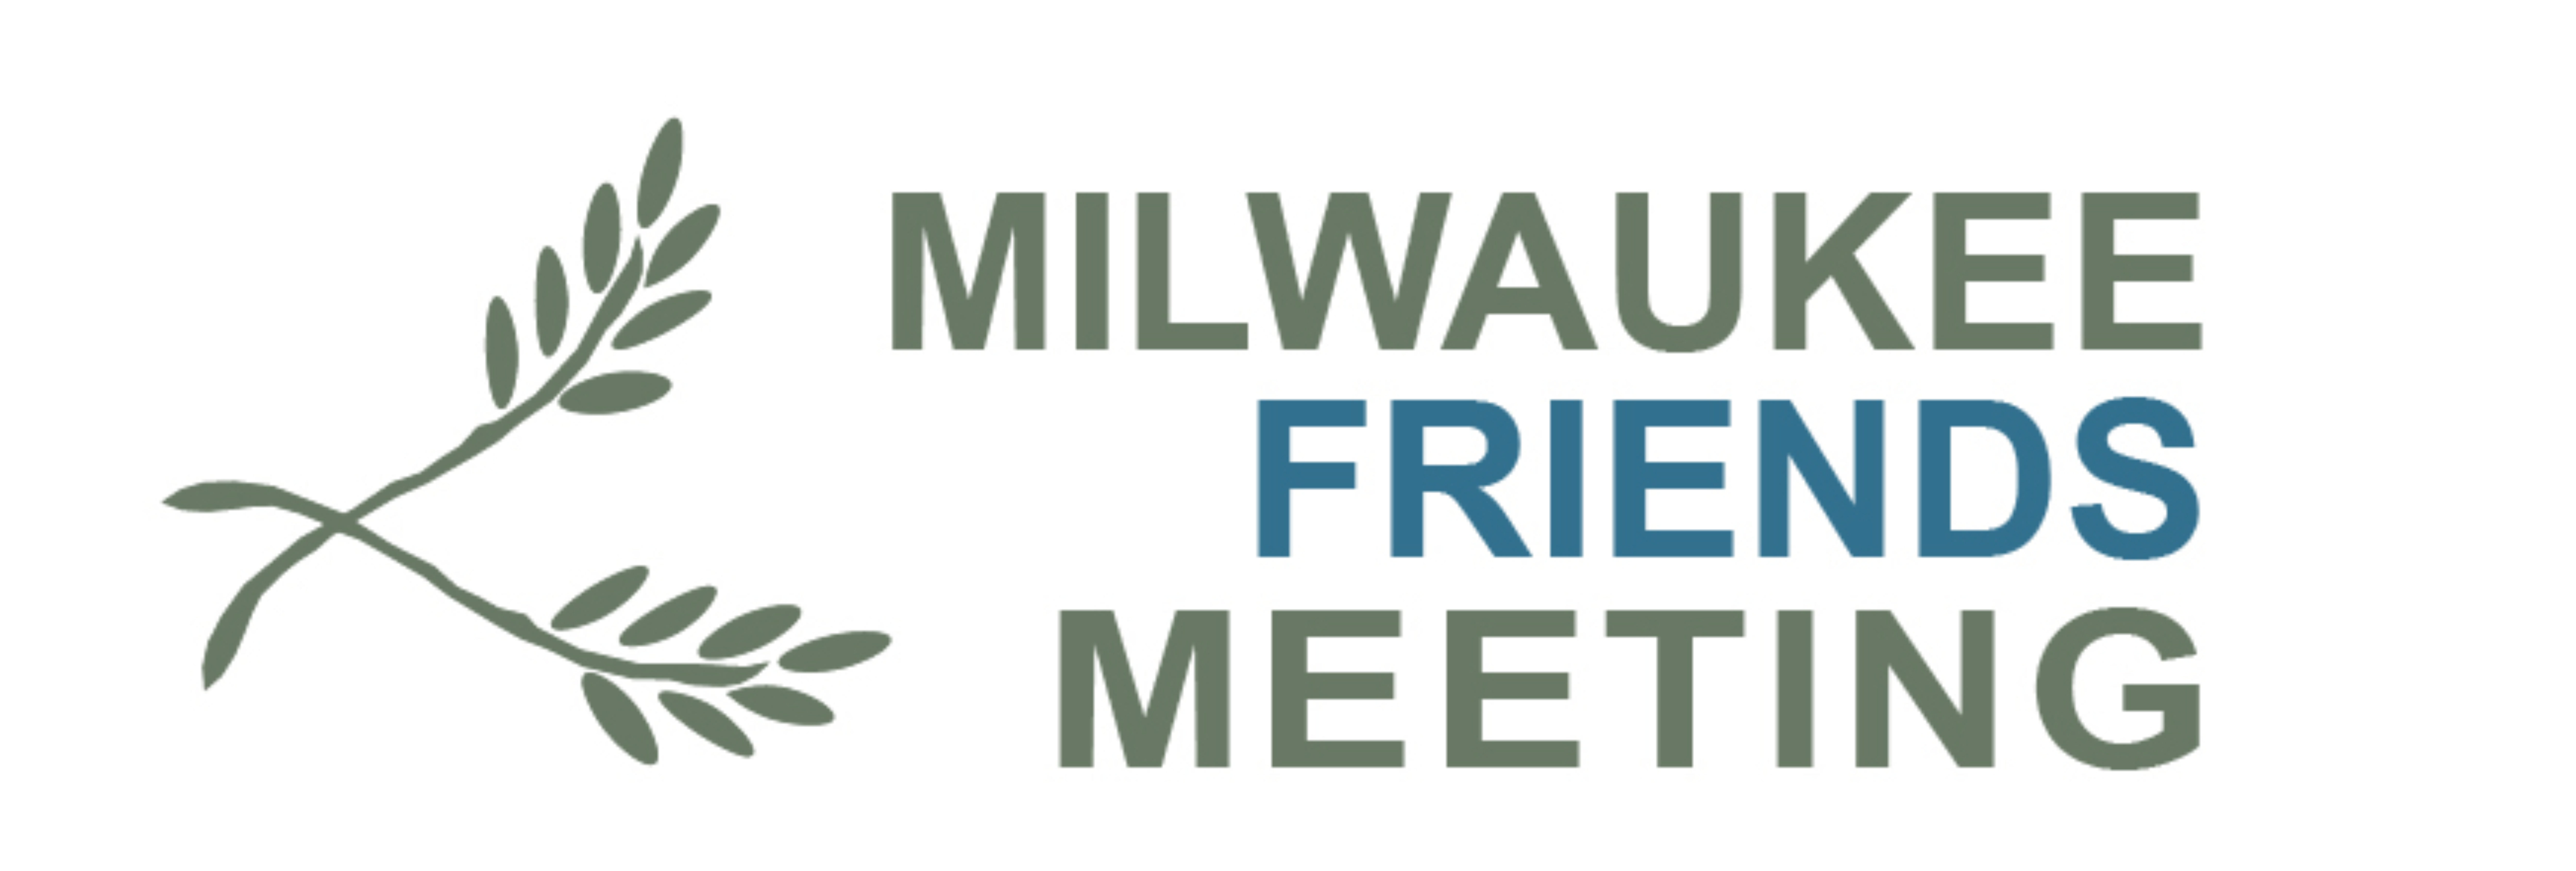 Milwaukee Friends Meeting